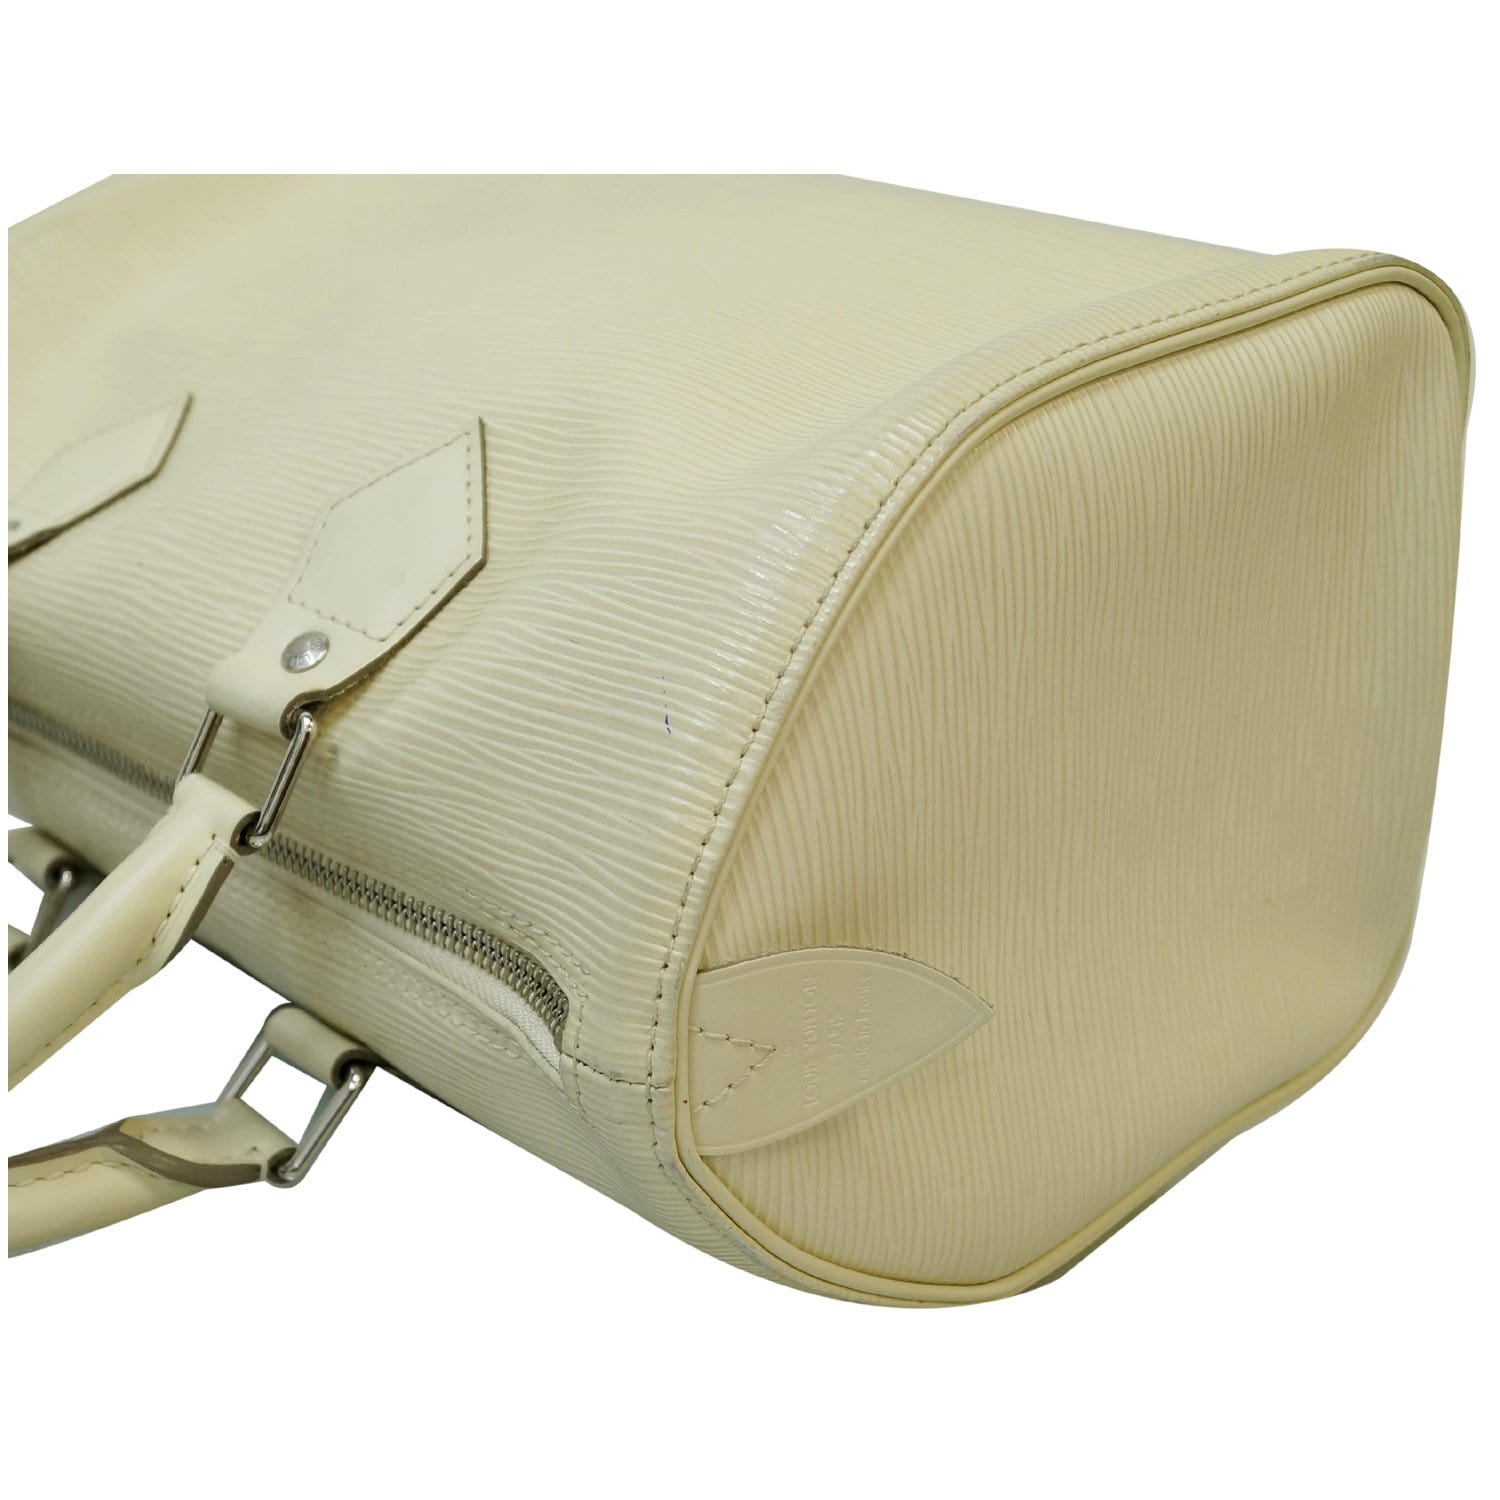 Louis Vuitton Speedy 30 Epi Leather Satchel Bag Rank B